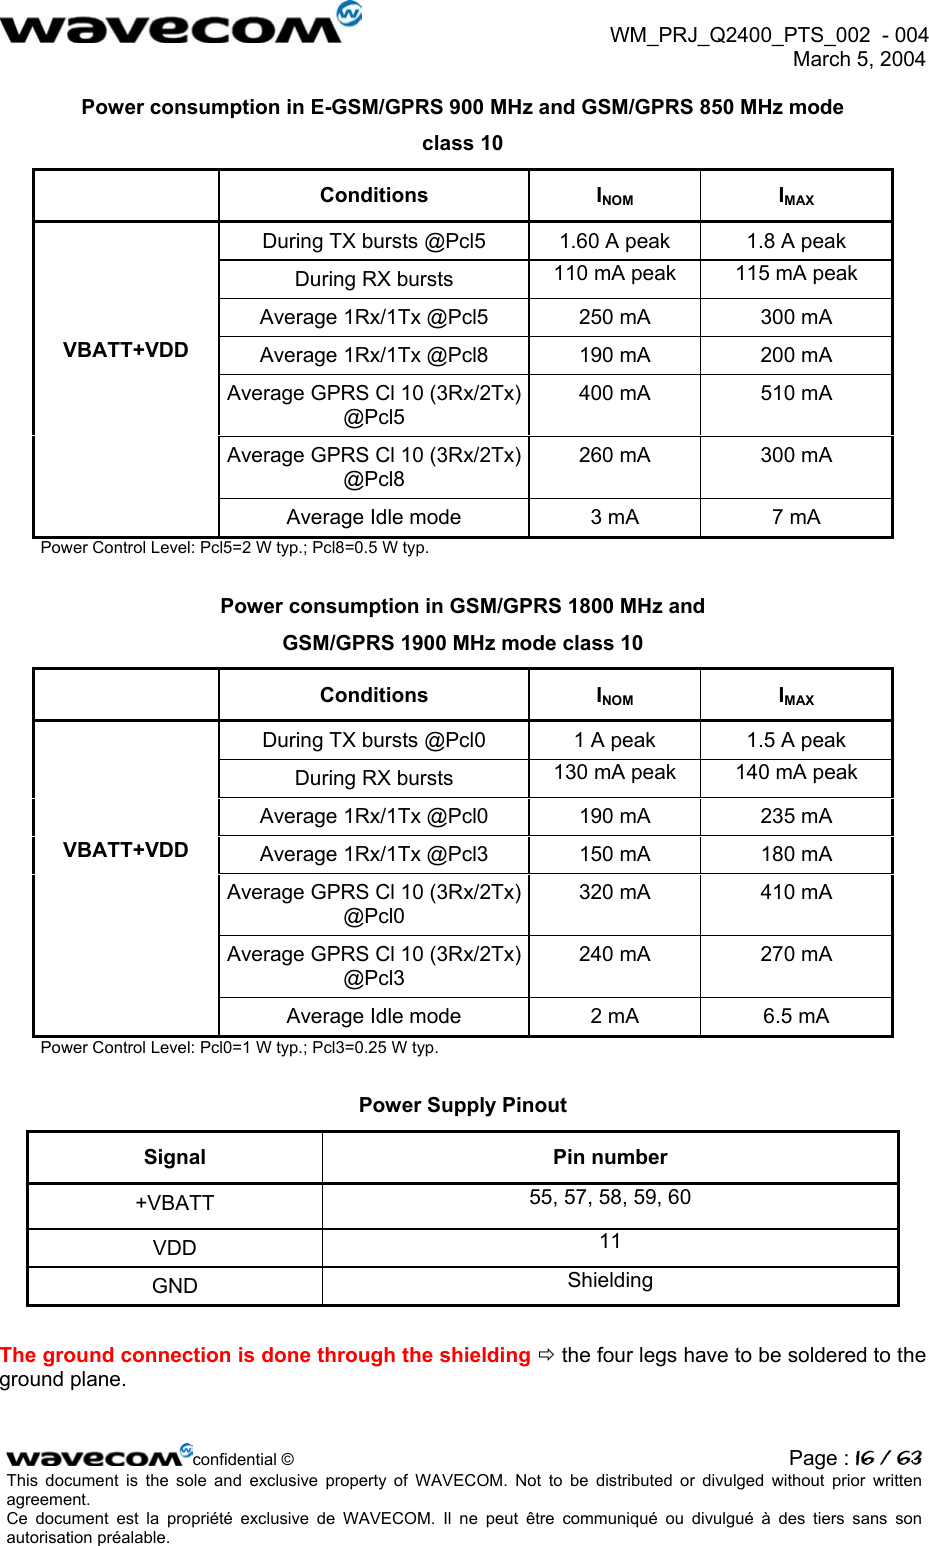  WM_PRJ_Q2400_PTS_002  - 004  March 5, 2004   Power consumption in E-GSM/GPRS 900 MHz and GSM/GPRS 850 MHz mode class 10  Conditions INOM IMAX During TX bursts @Pcl5  1.60 A peak  1.8 A peak During RX bursts  110 mA peak  115 mA peak Average 1Rx/1Tx @Pcl5  250 mA  300 mA Average 1Rx/1Tx @Pcl8  190 mA  200 mA Average GPRS Cl 10 (3Rx/2Tx) @Pcl5 400 mA  510 mA Average GPRS Cl 10 (3Rx/2Tx) @Pcl8 260 mA  300 mA    VBATT+VDD    Average Idle mode  3 mA  7 mA Power Control Level: Pcl5=2 W typ.; Pcl8=0.5 W typ.  Power consumption in GSM/GPRS 1800 MHz and  GSM/GPRS 1900 MHz mode class 10  Conditions INOM IMAX During TX bursts @Pcl0  1 A peak  1.5 A peak During RX bursts  130 mA peak  140 mA peak Average 1Rx/1Tx @Pcl0  190 mA  235 mA Average 1Rx/1Tx @Pcl3  150 mA  180 mA Average GPRS Cl 10 (3Rx/2Tx) @Pcl0 320 mA  410 mA Average GPRS Cl 10 (3Rx/2Tx) @Pcl3 240 mA  270 mA    VBATT+VDD    Average Idle mode  2 mA  6.5 mA Power Control Level: Pcl0=1 W typ.; Pcl3=0.25 W typ.  Power Supply Pinout Signal Pin number +VBATT  55, 57, 58, 59, 60 VDD  11 GND  Shielding  The ground connection is done through the shielding  the four legs have to be soldered to the ground plane. confidential © Page : 16 / 63This document is the sole and exclusive property of WAVECOM. Not to be distributed or divulged without prior written agreement.  Ce document est la propriété exclusive de WAVECOM. Il ne peut être communiqué ou divulgué à des tiers sans son autorisation préalable.  